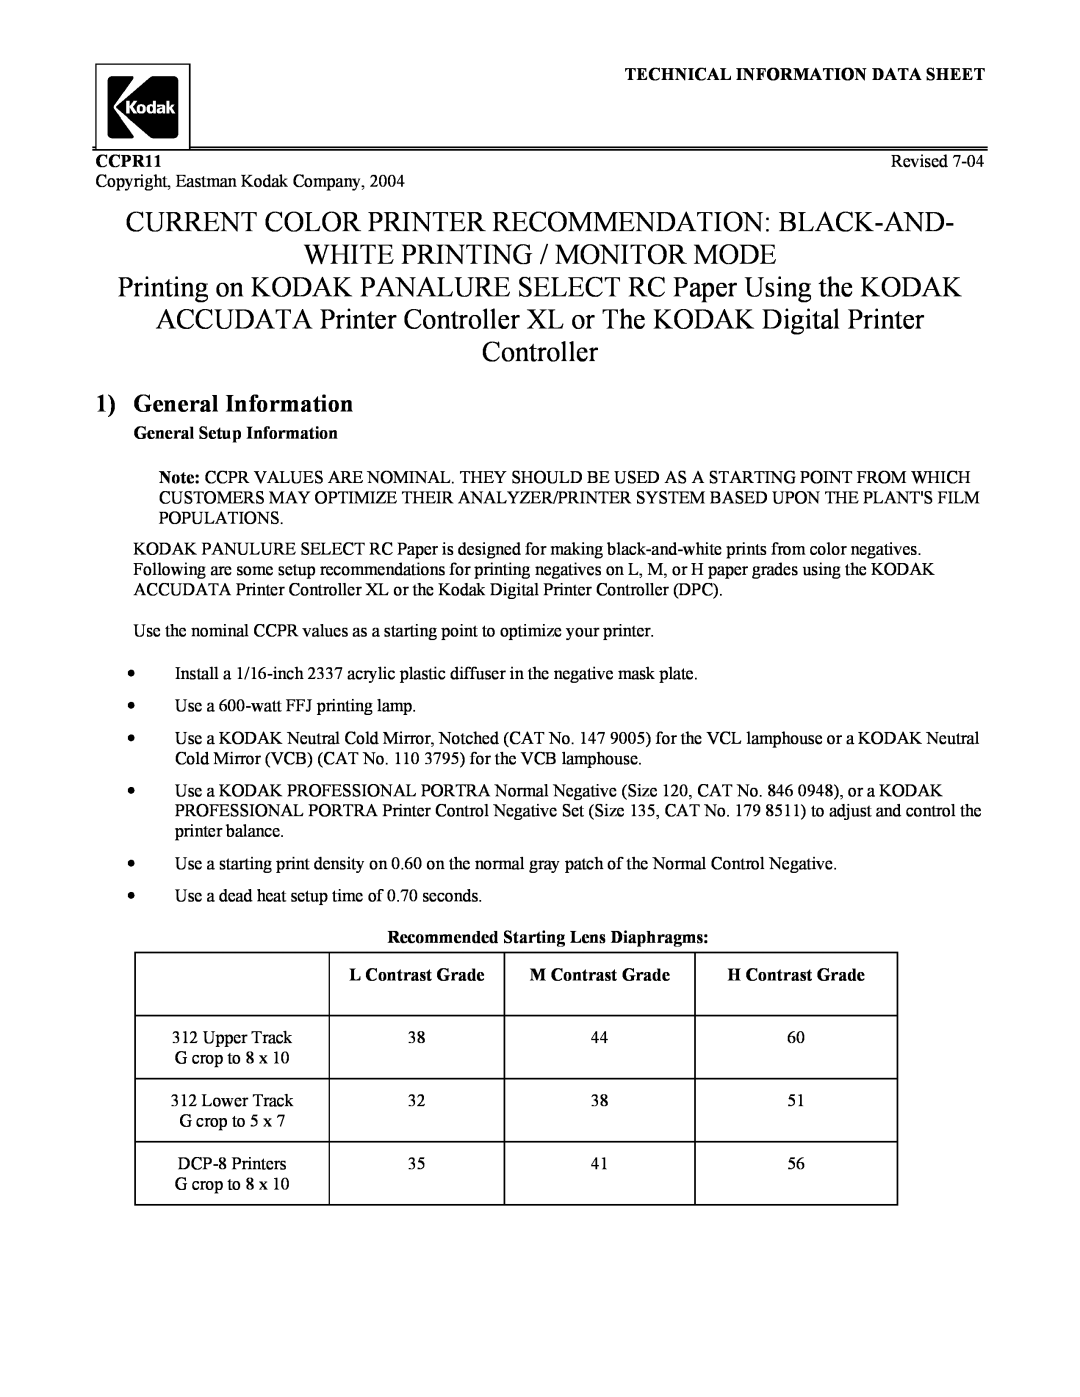 Kodak CCPR11 manual Technical Information Data Sheet, General Setup Information, Recommended Starting Lens Diaphragms 